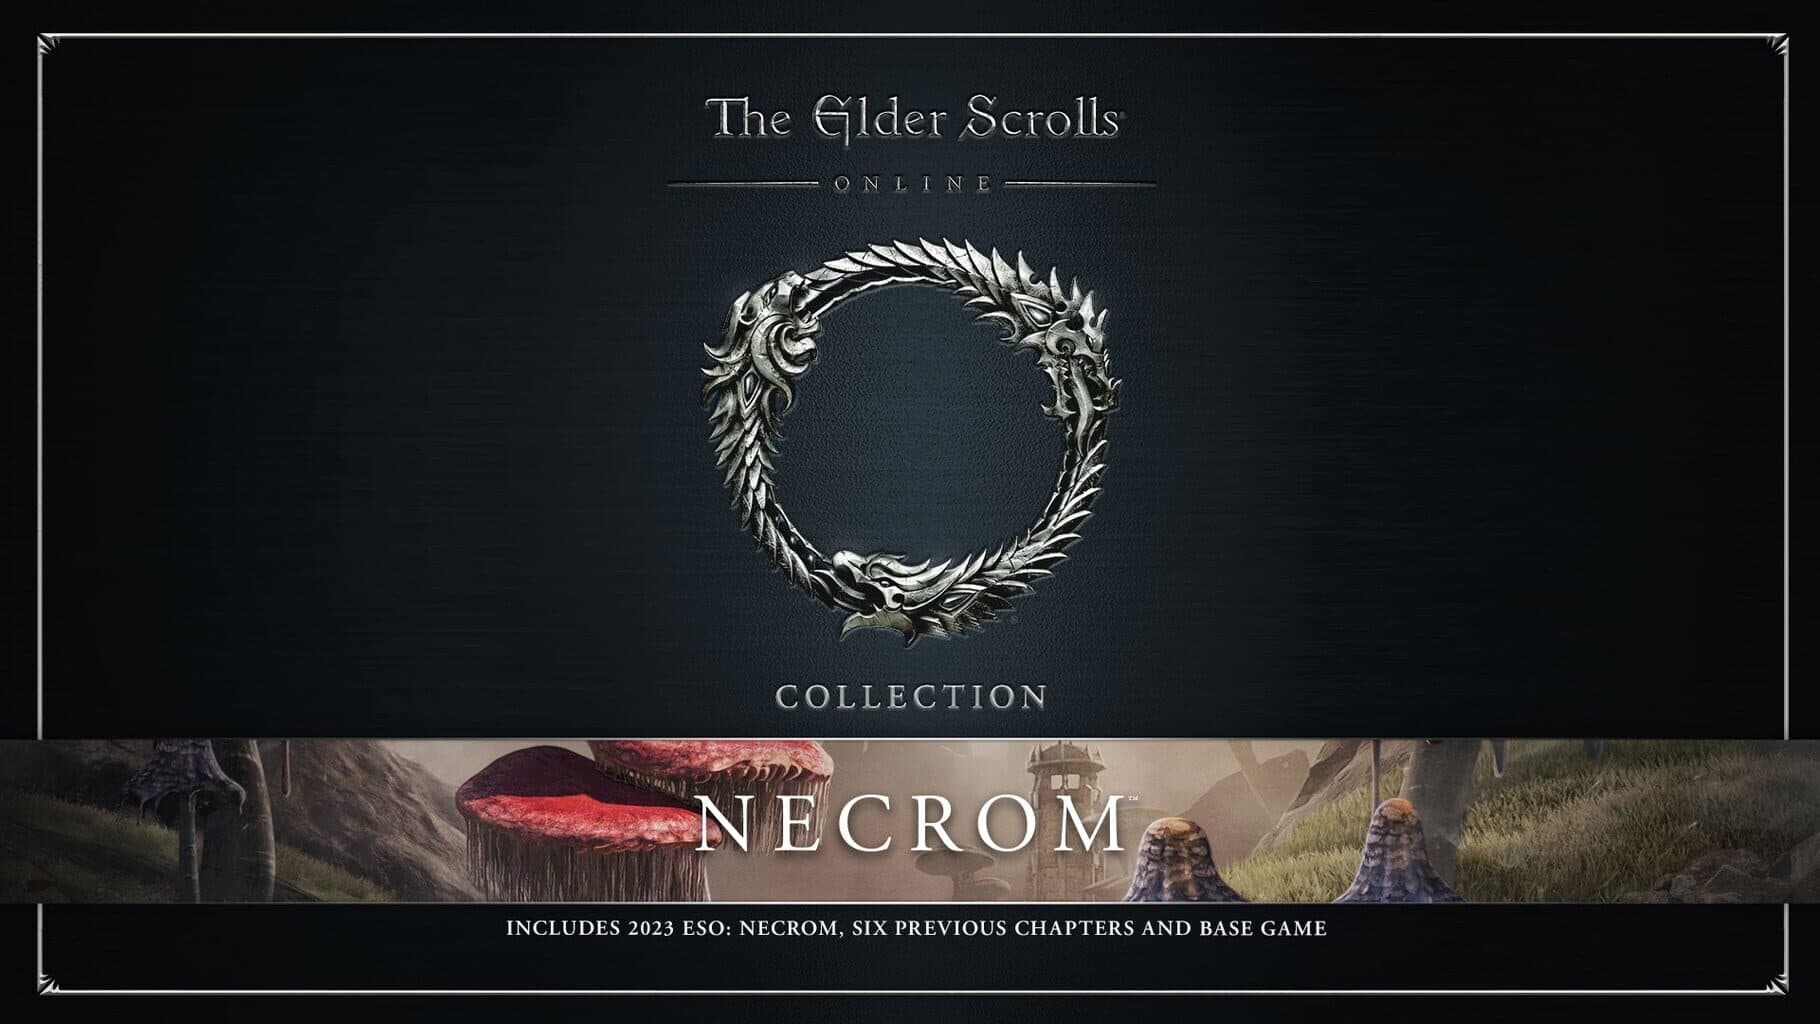 The Elder Scrolls Online Collection: Necrom Image